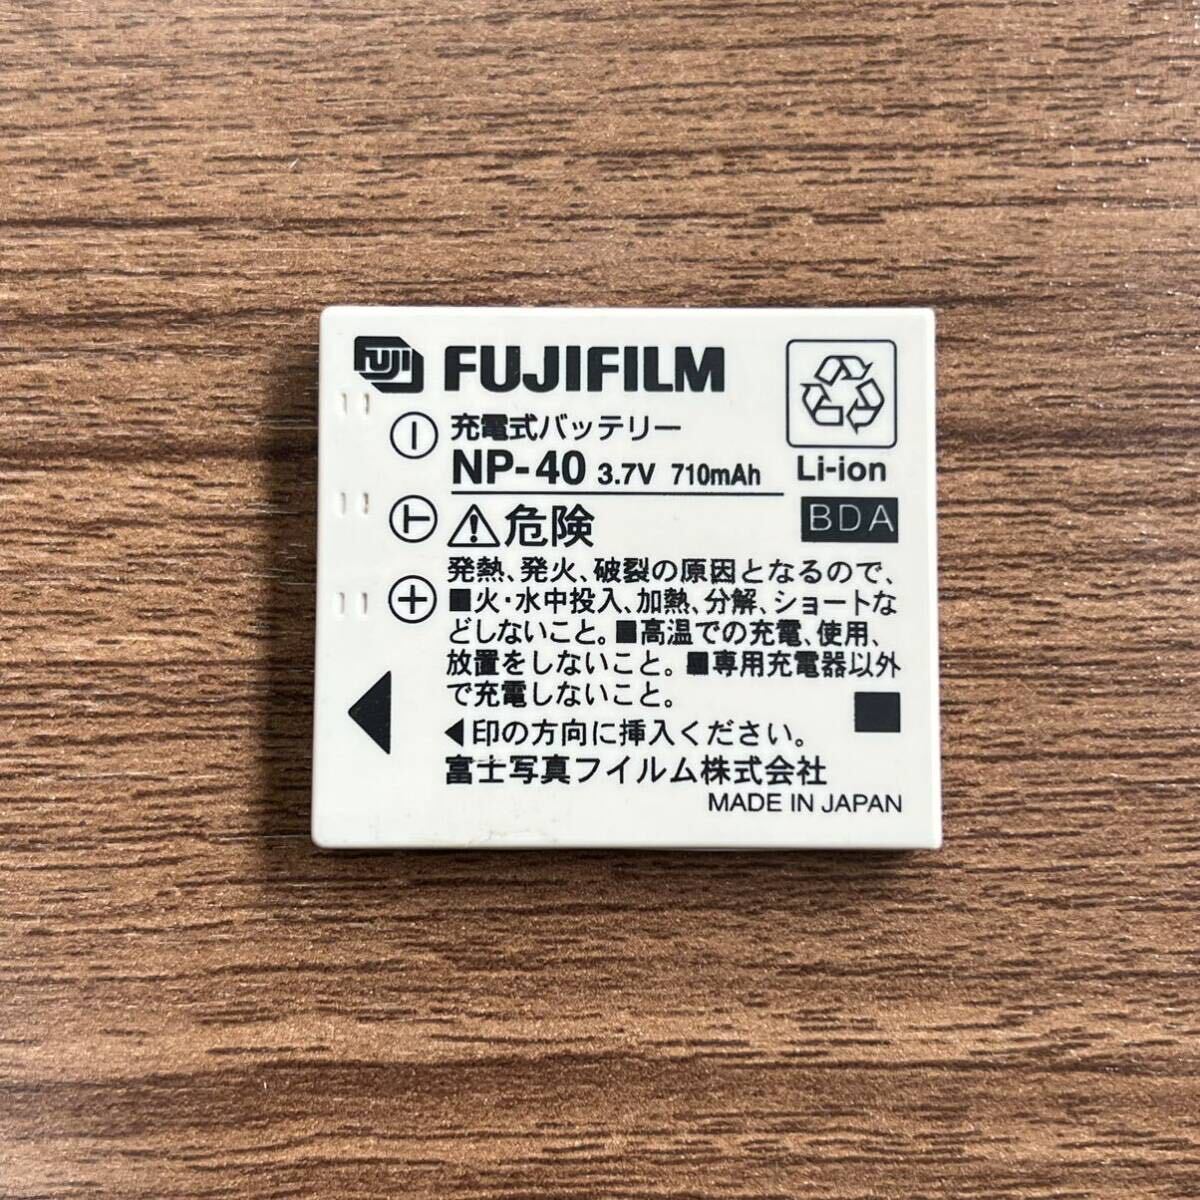 U3 FUJIFILM FinePix F700 デジカメコンデ ジコンパクトデジタルカメラ シルバー 富士フィルム フジフィルムファインピクス バッテリー付_画像9